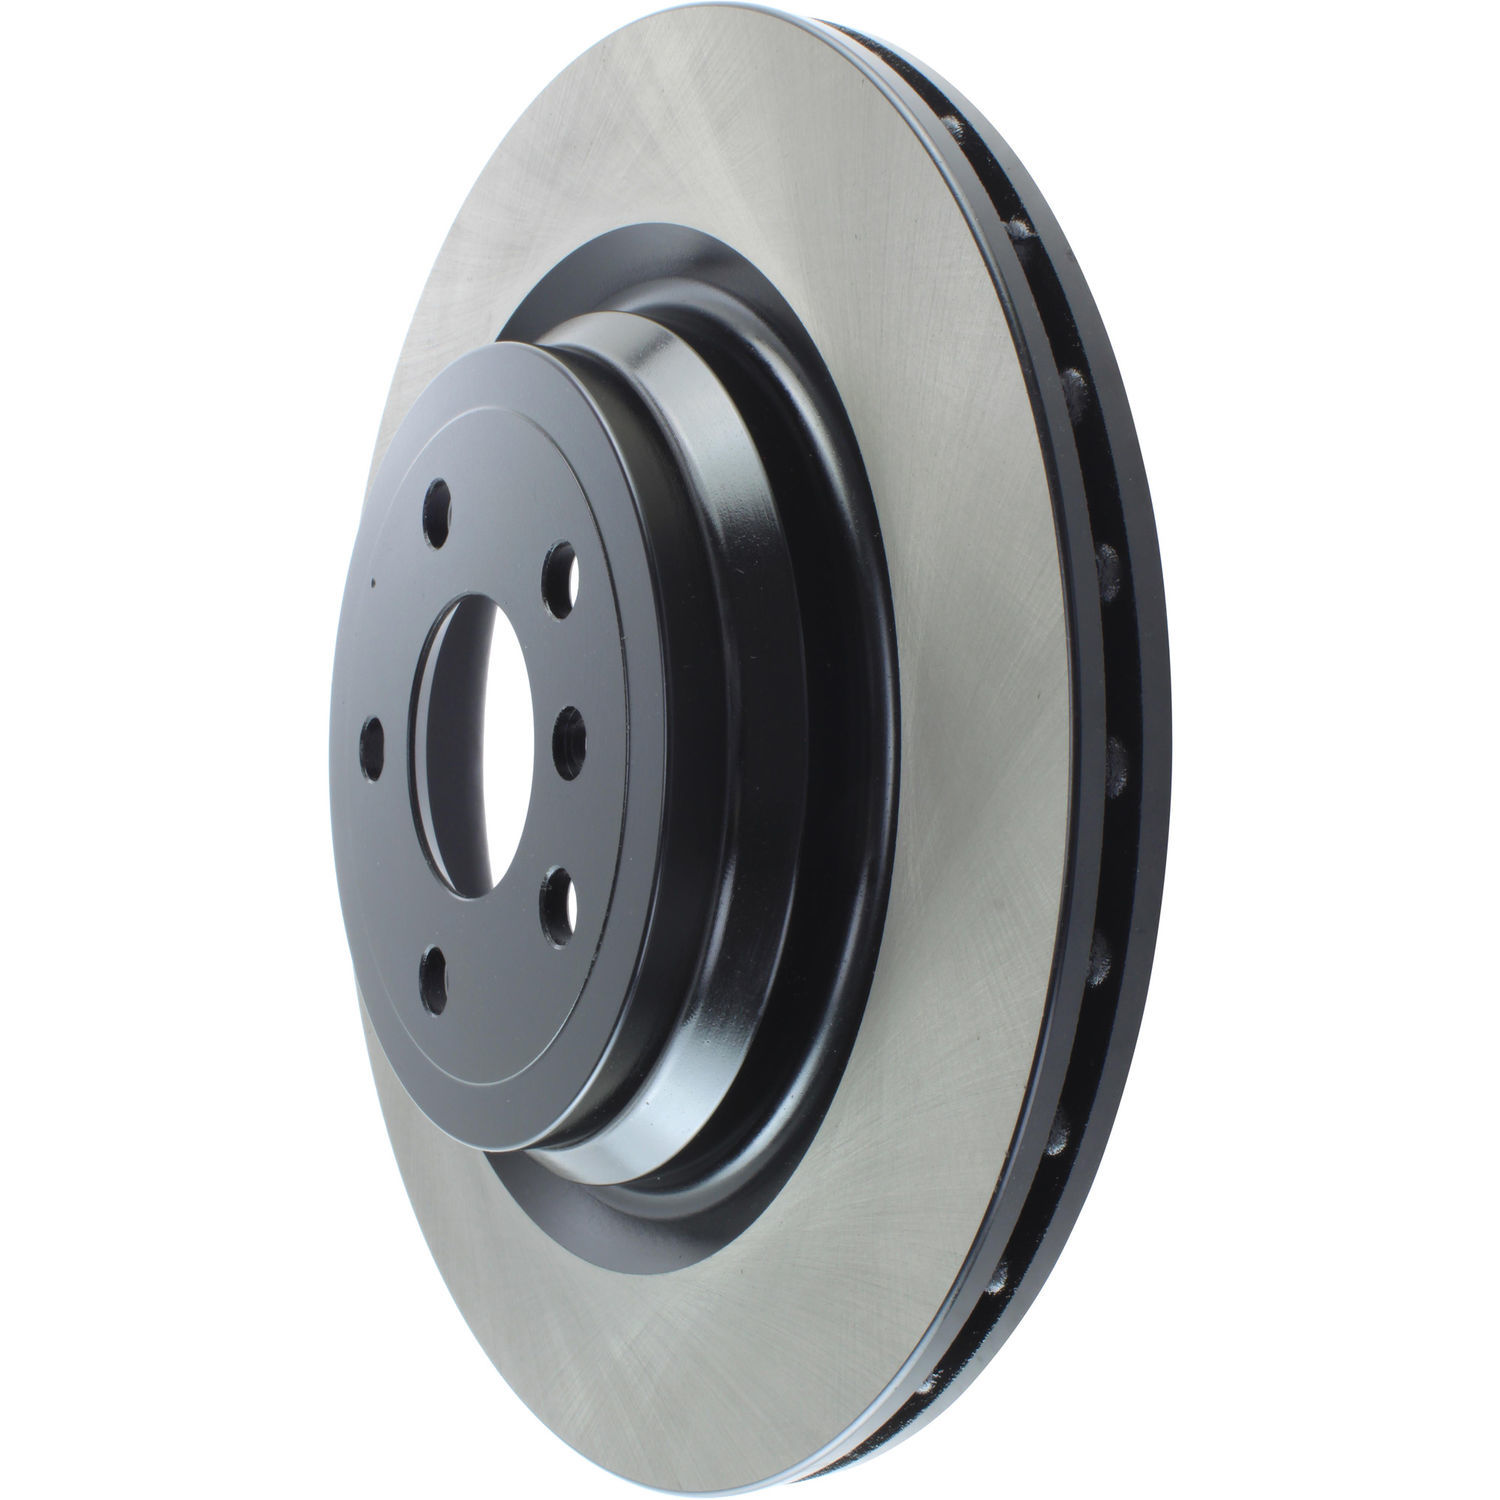 CENTRIC PARTS - High Carbon Alloy Brake Disc (Rear) - CEC 125.35127